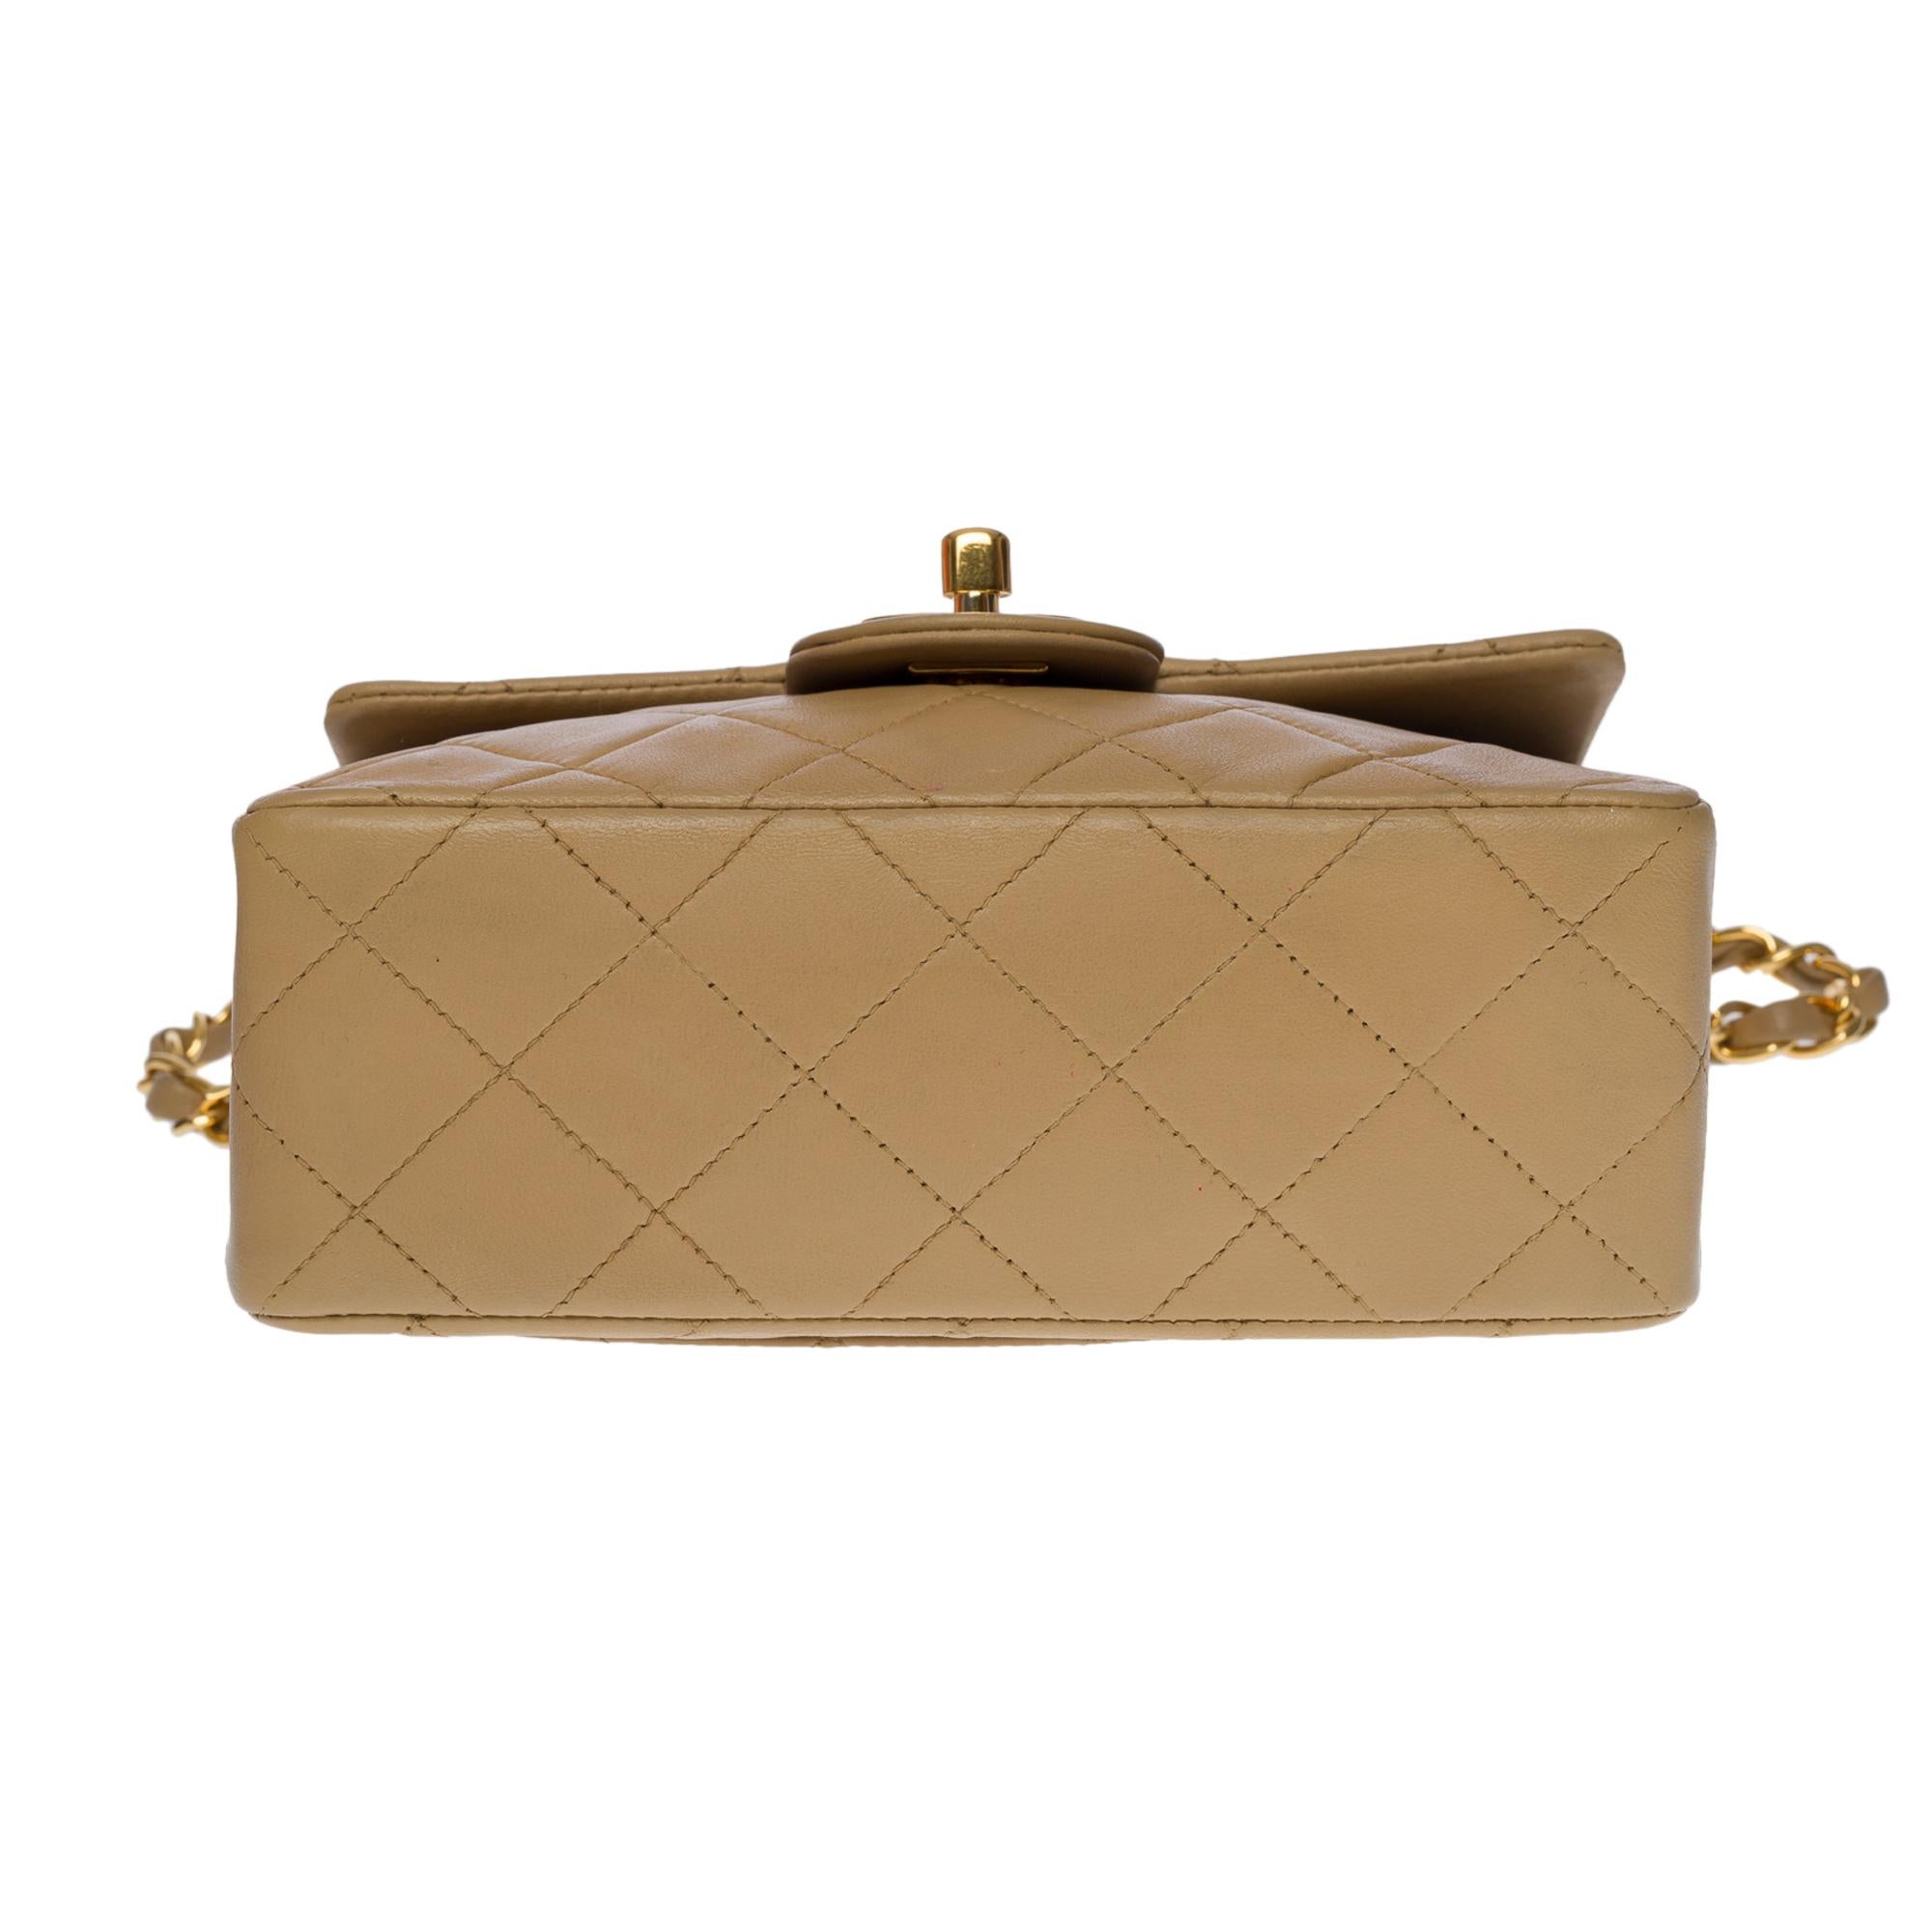 Splendid Chanel Timeless Mini Flap bag in beige quilted lambskin, GHW 7